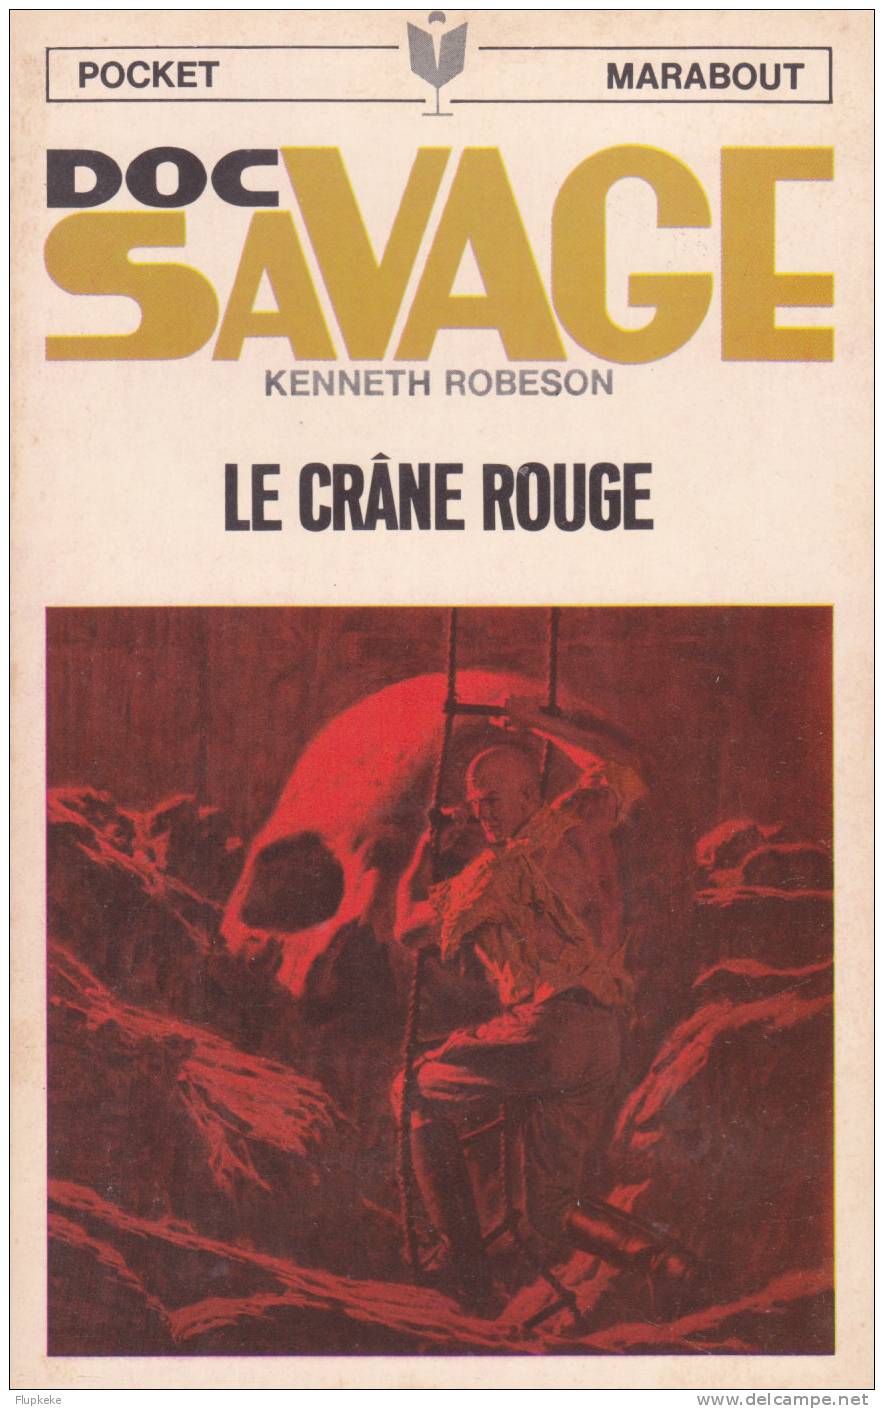 Pocket Marabout 84 Doc Savage Le Crâne Rouge Kenneth Robeson 1970 Couverture Jim Bama Illustrations Lievens - Marabout Junior